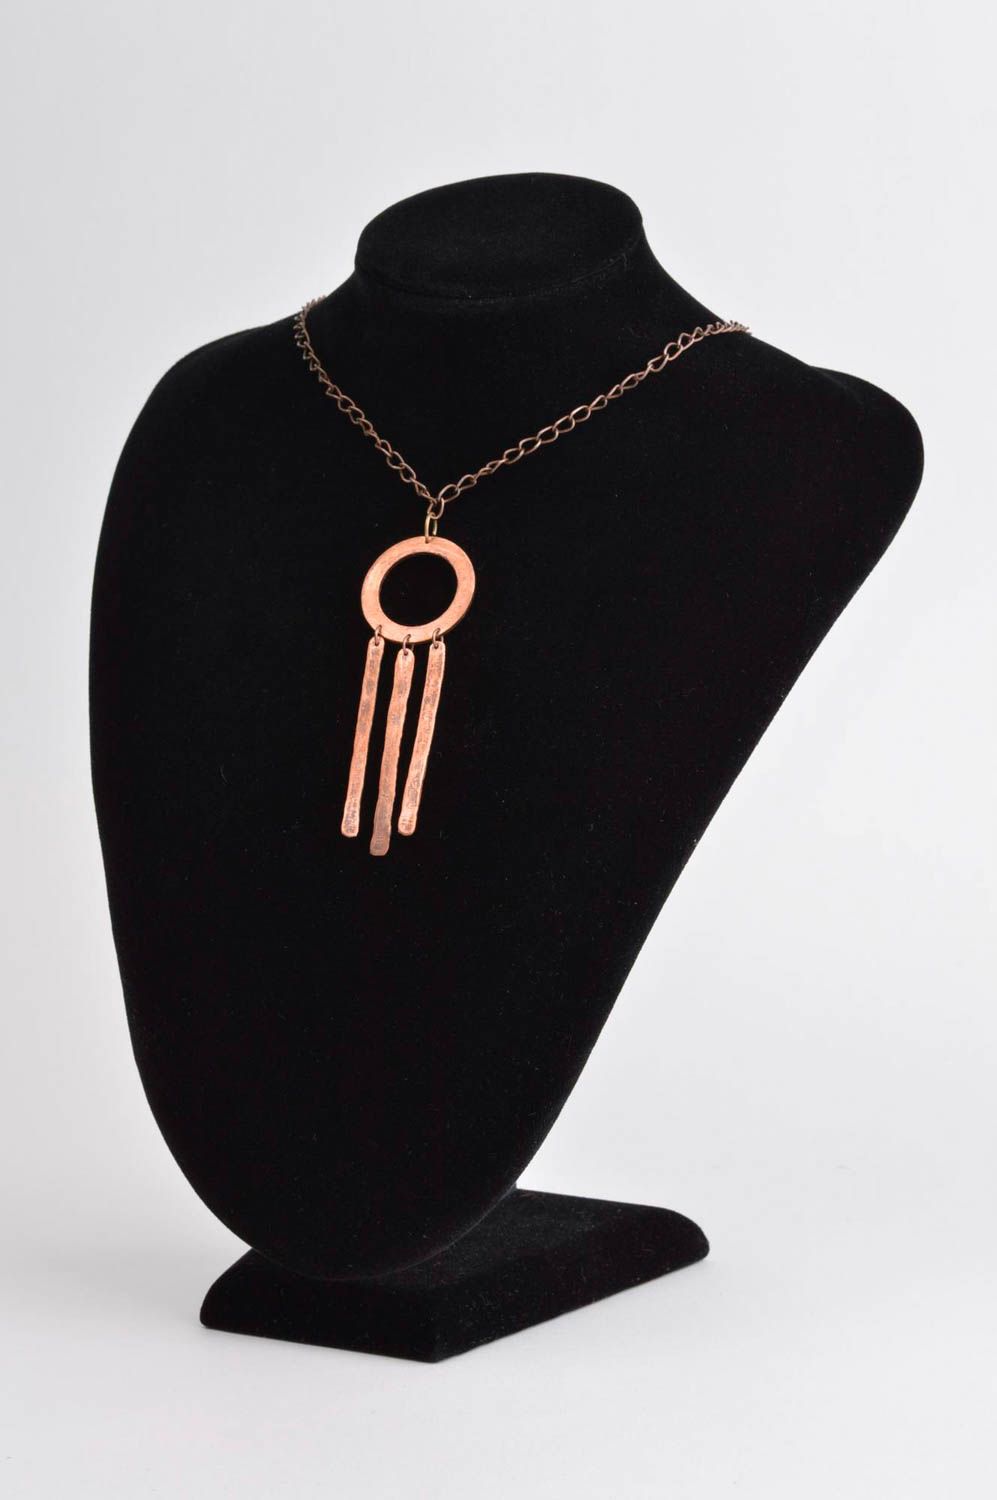 Copper pendant handmade pendant accessories for women beautiful pendant fashion  photo 1